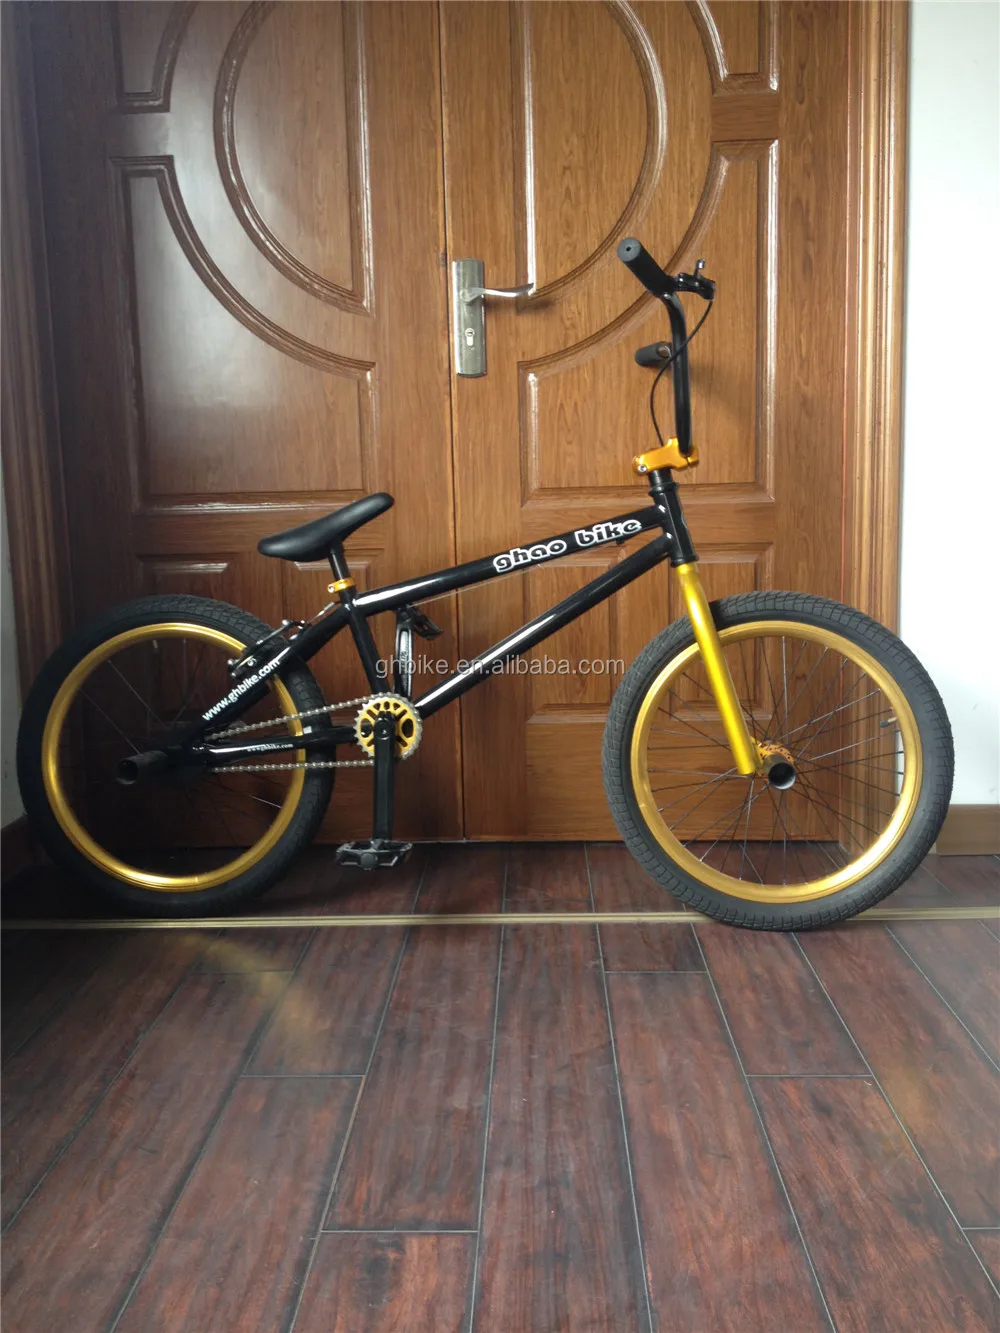 20 inch haro bmx bike